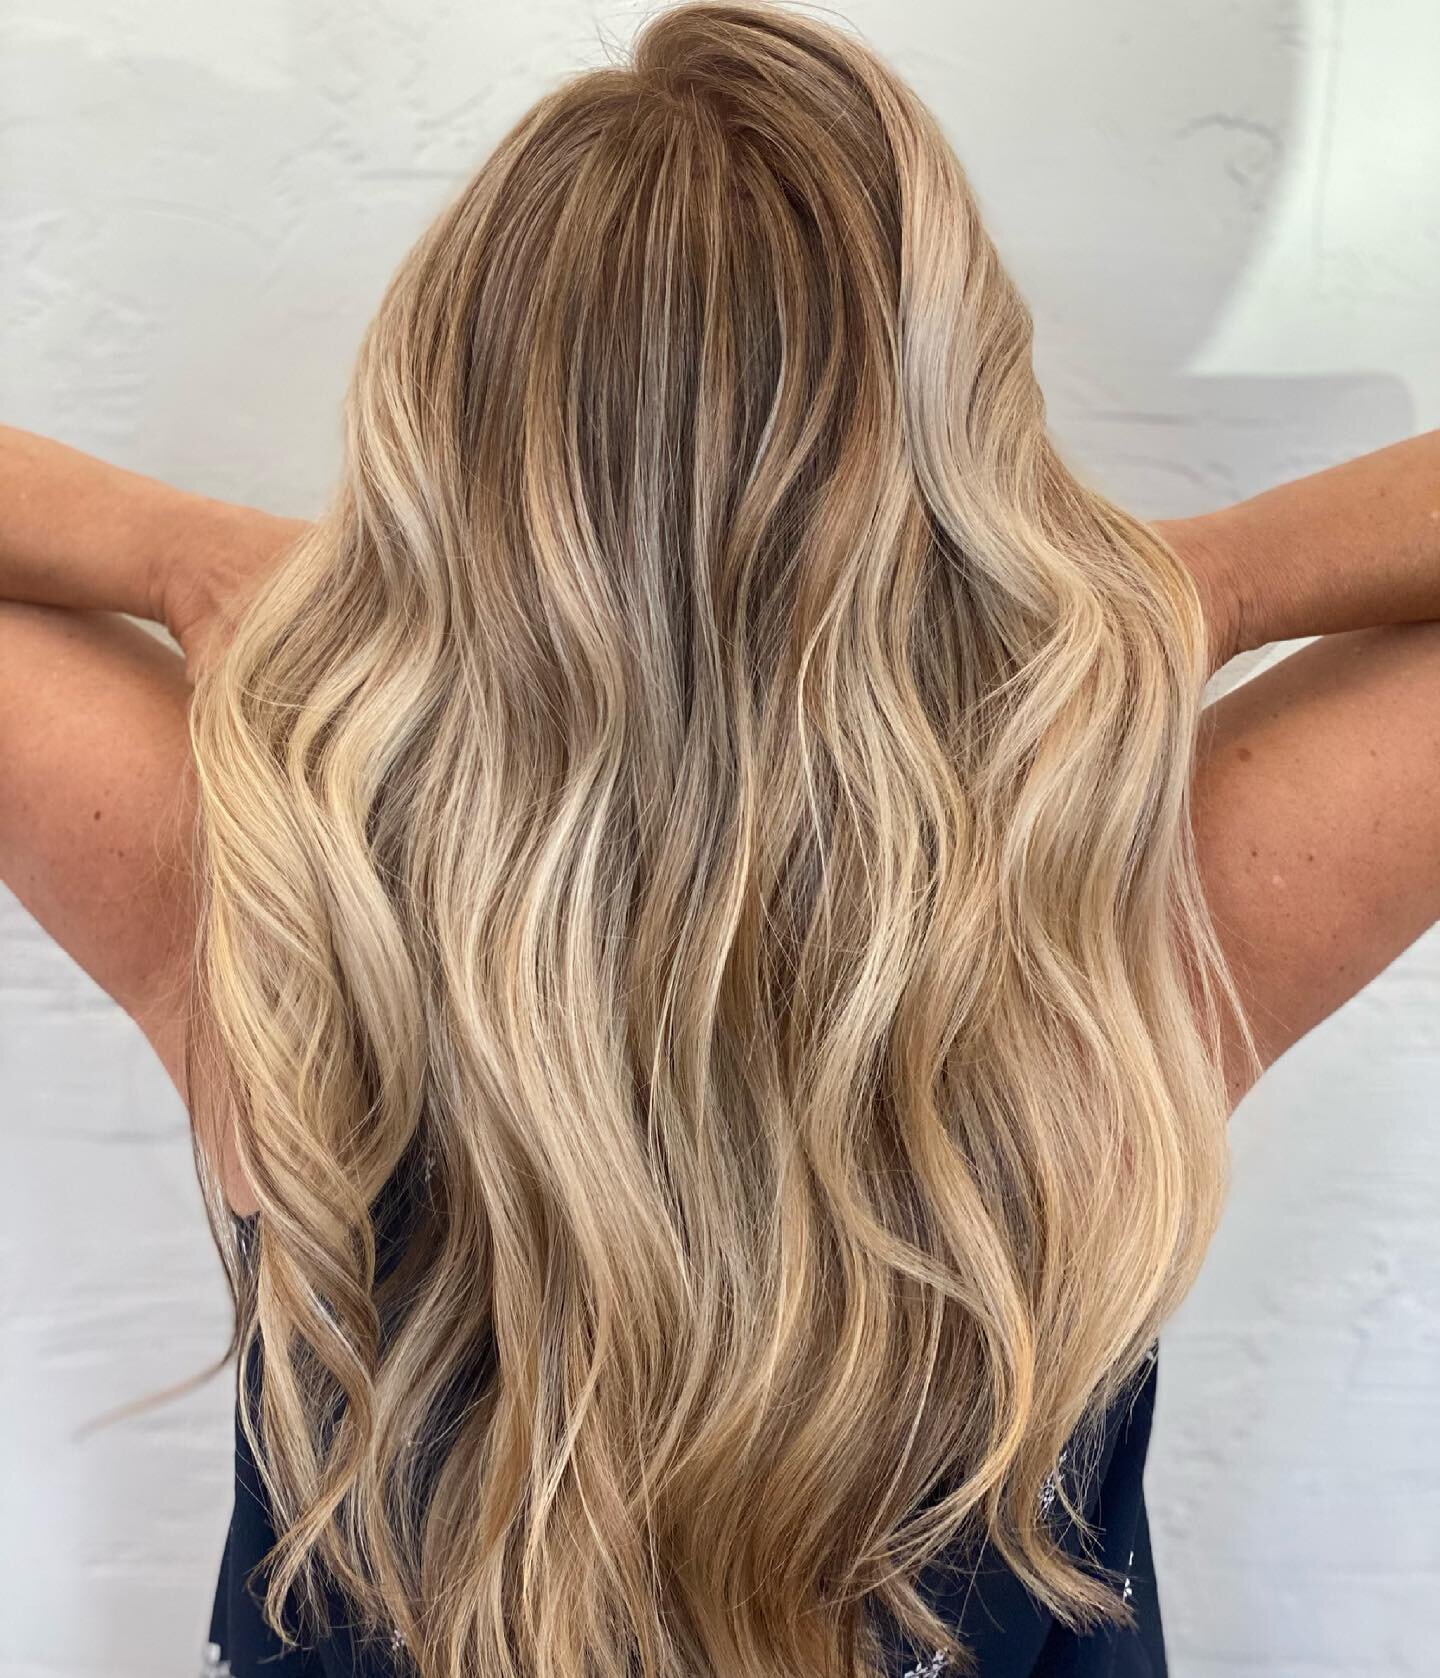 That perfect beachy blonde 🏖 @thehairdresserlaurak